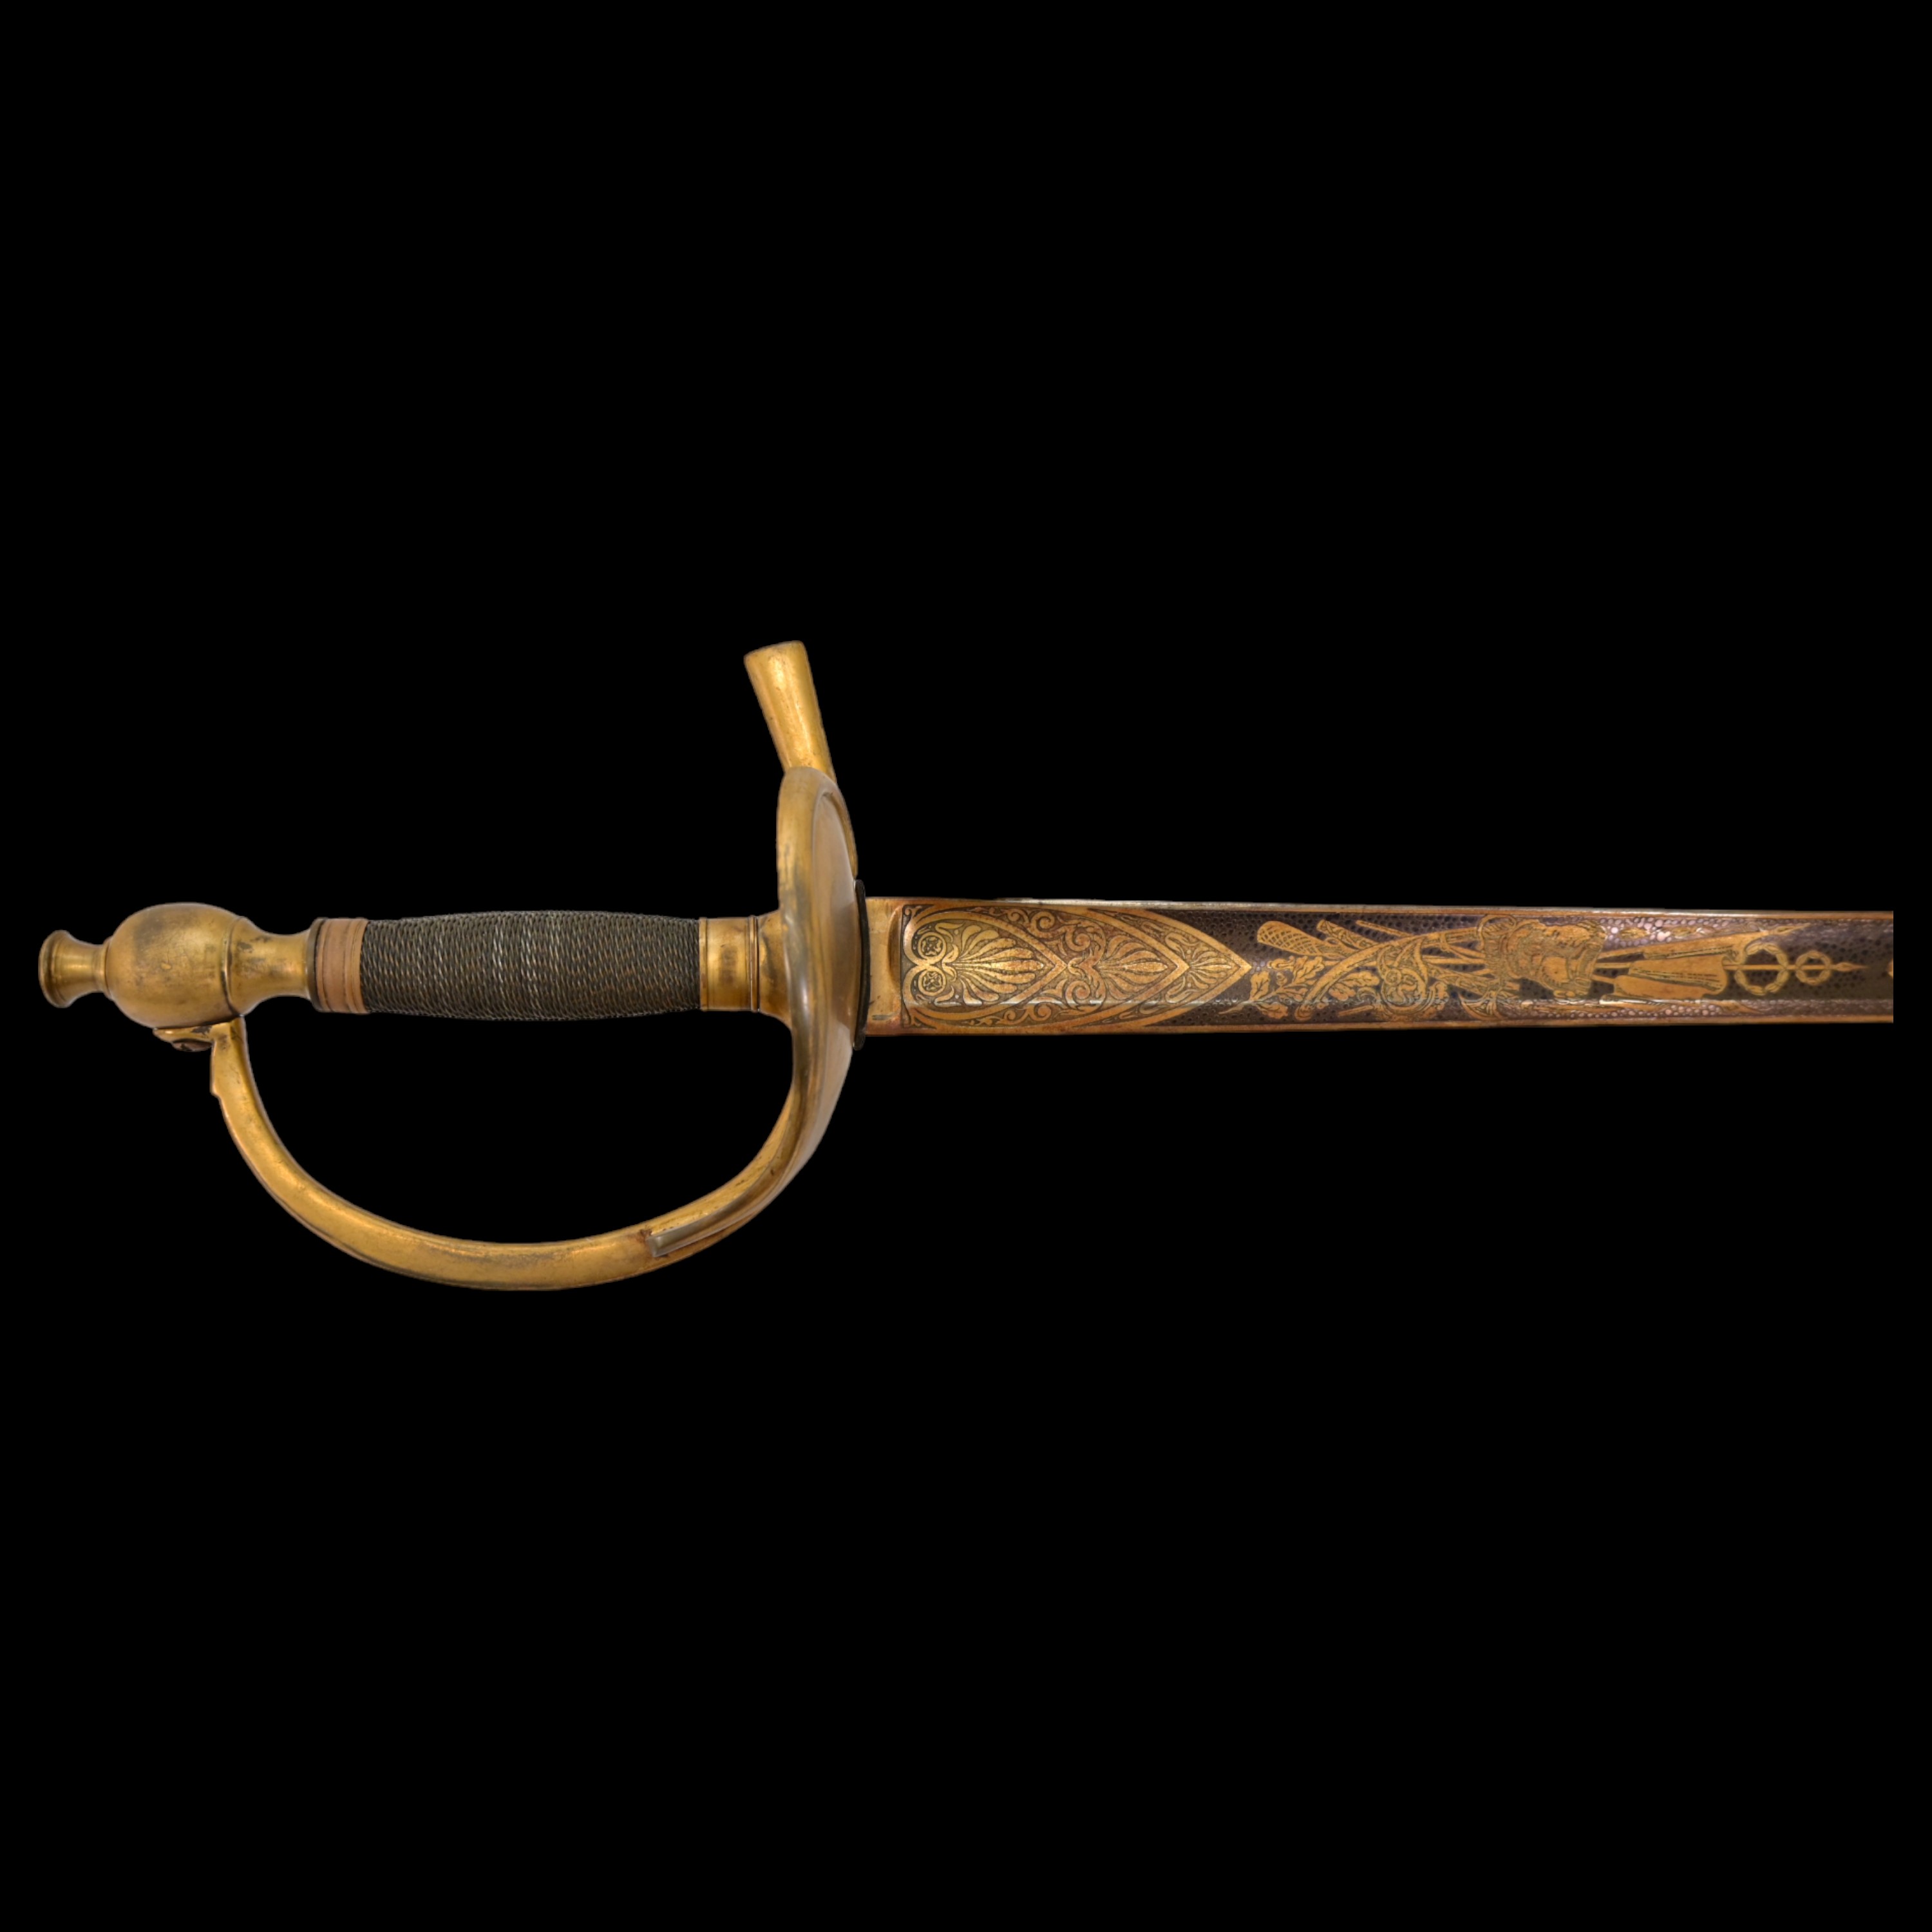 Russian sword, "For bravery" signature on the blade "I Boyarshinov, Zatoust, 1831". - Image 18 of 25